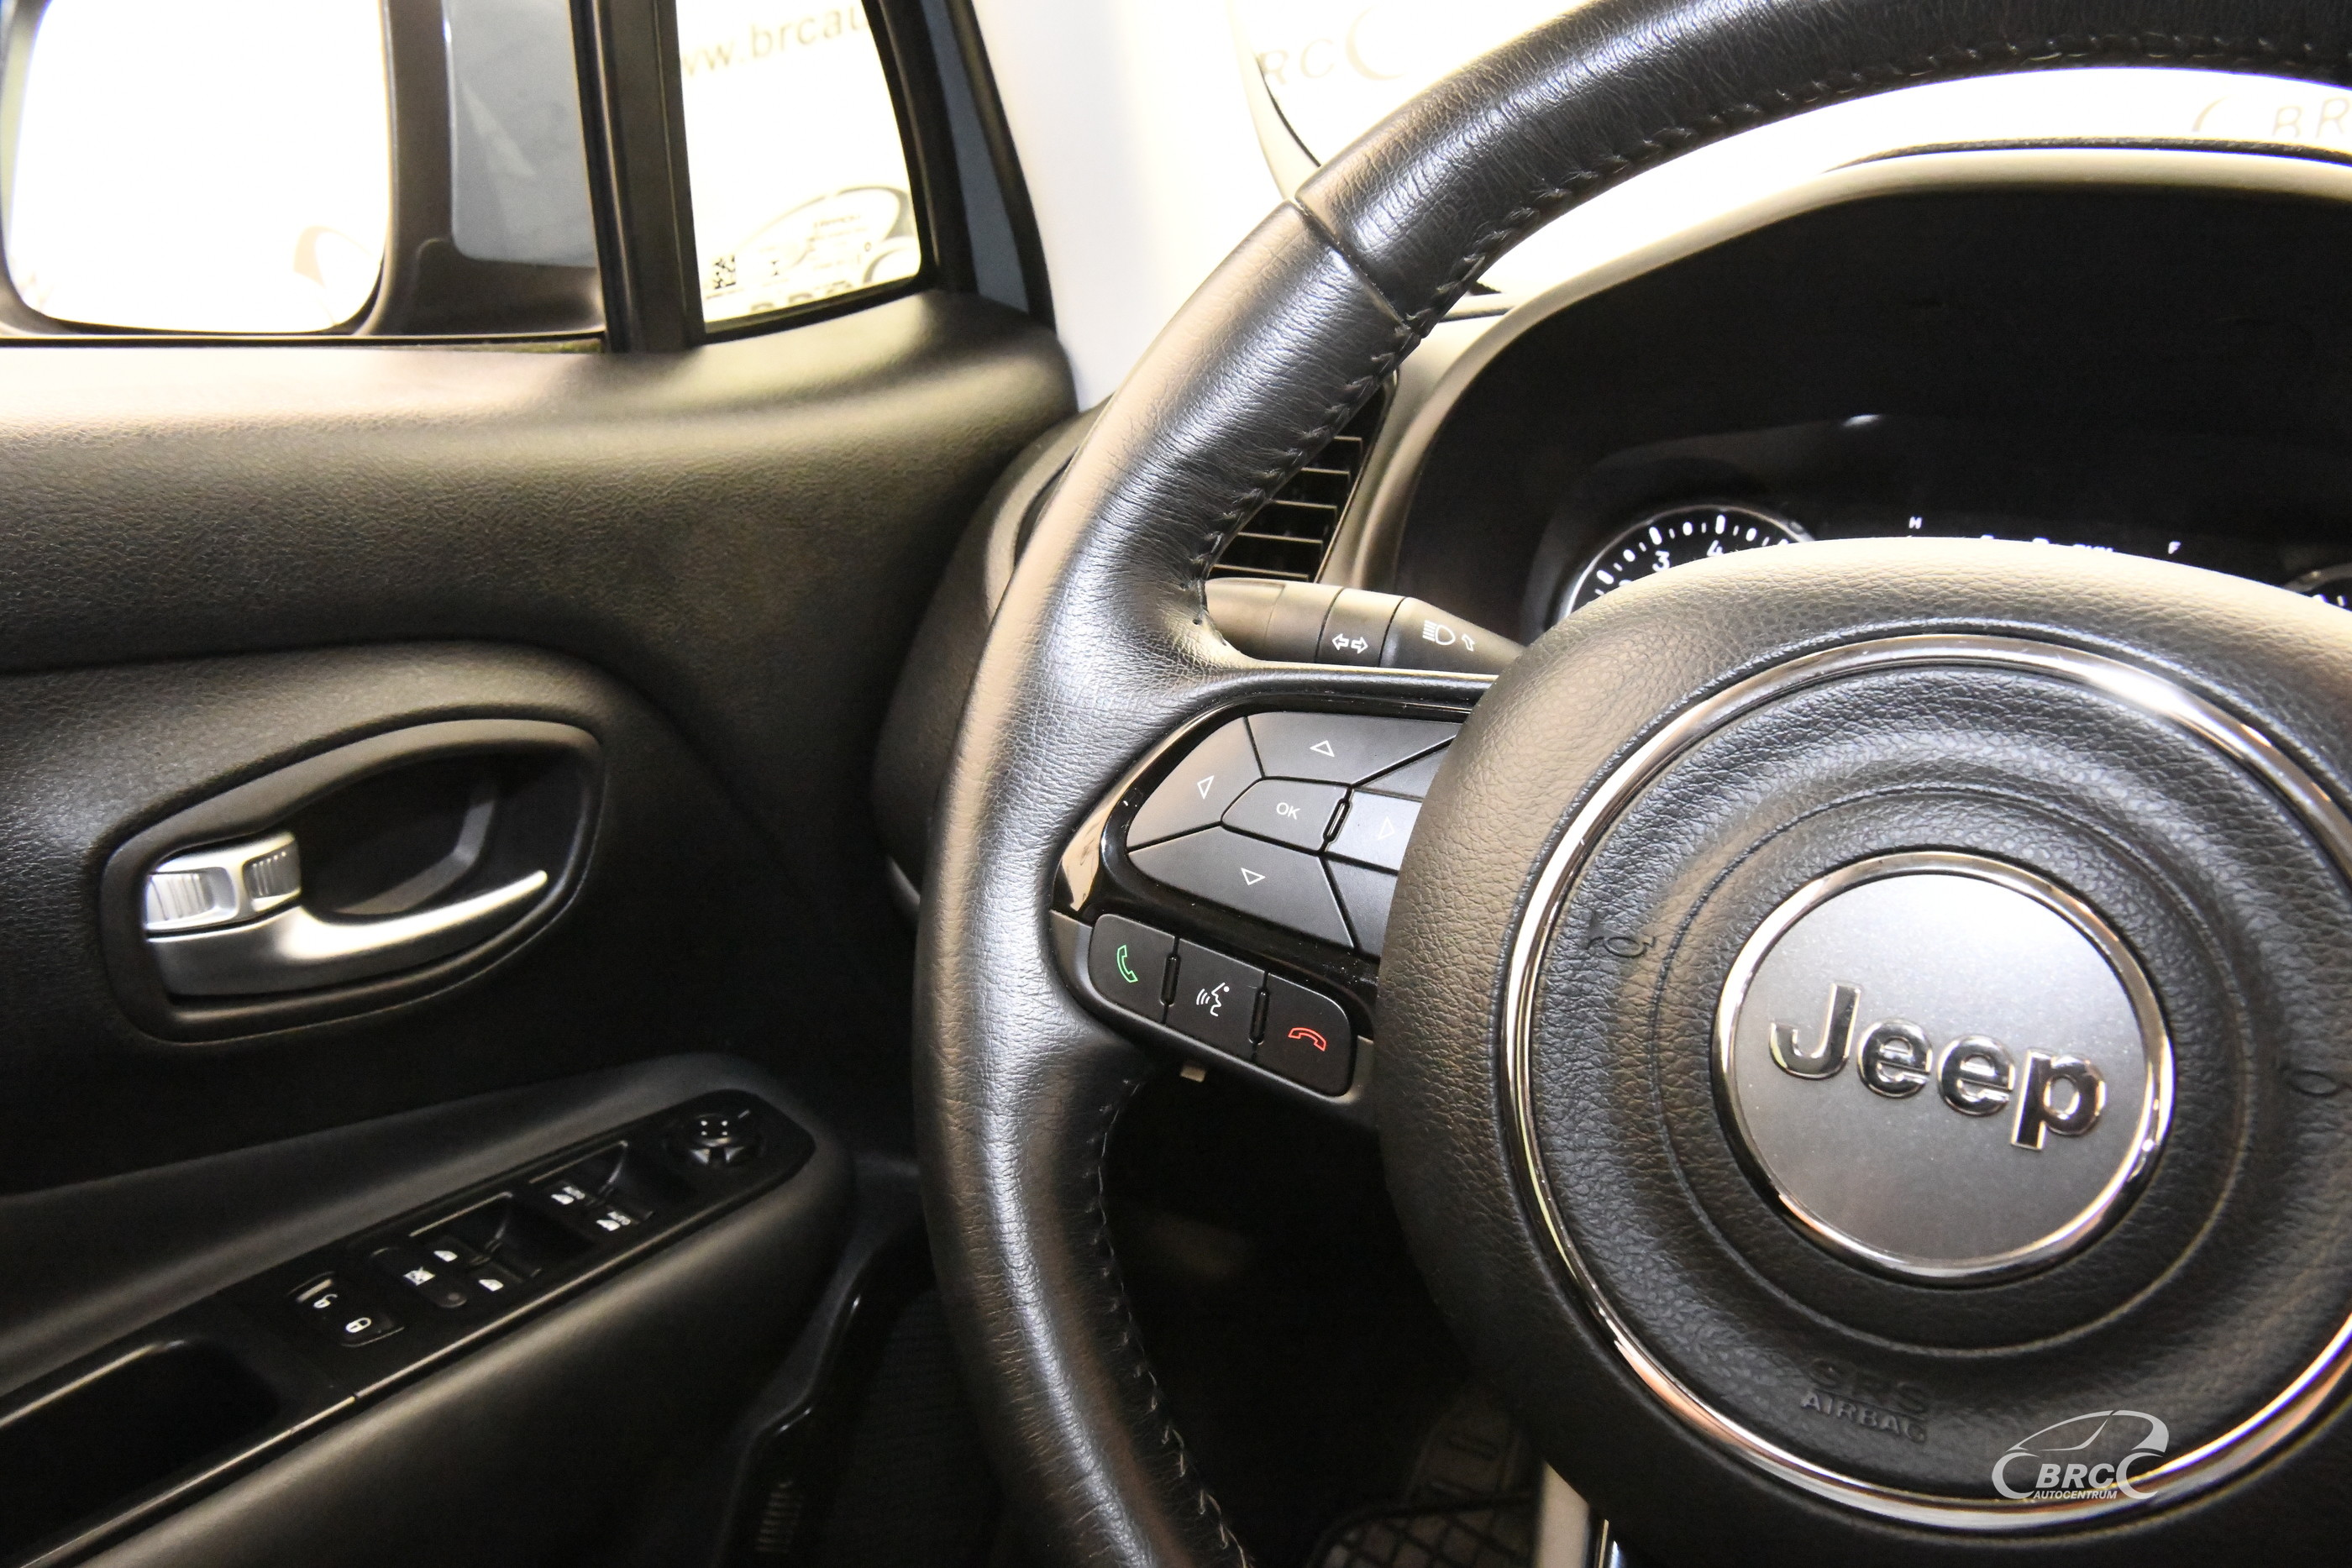 Jeep Renegade 2.4 Flexi Fuel Automatas